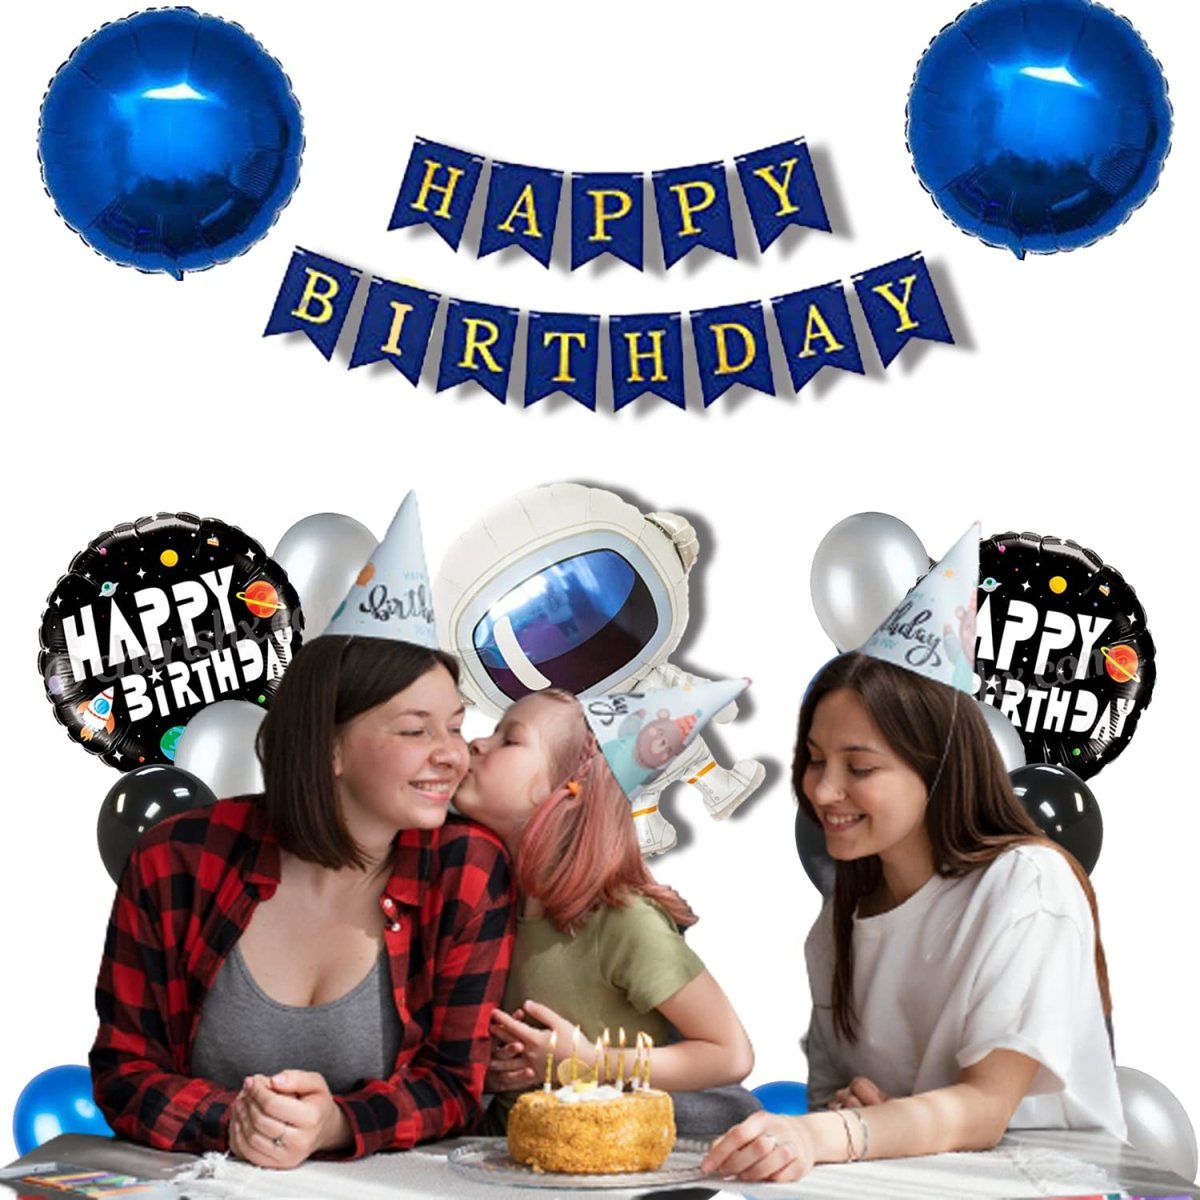 Space theme Kids Birthday decoration Items - Pack Of 31 freeshipping - CherishX Partystore